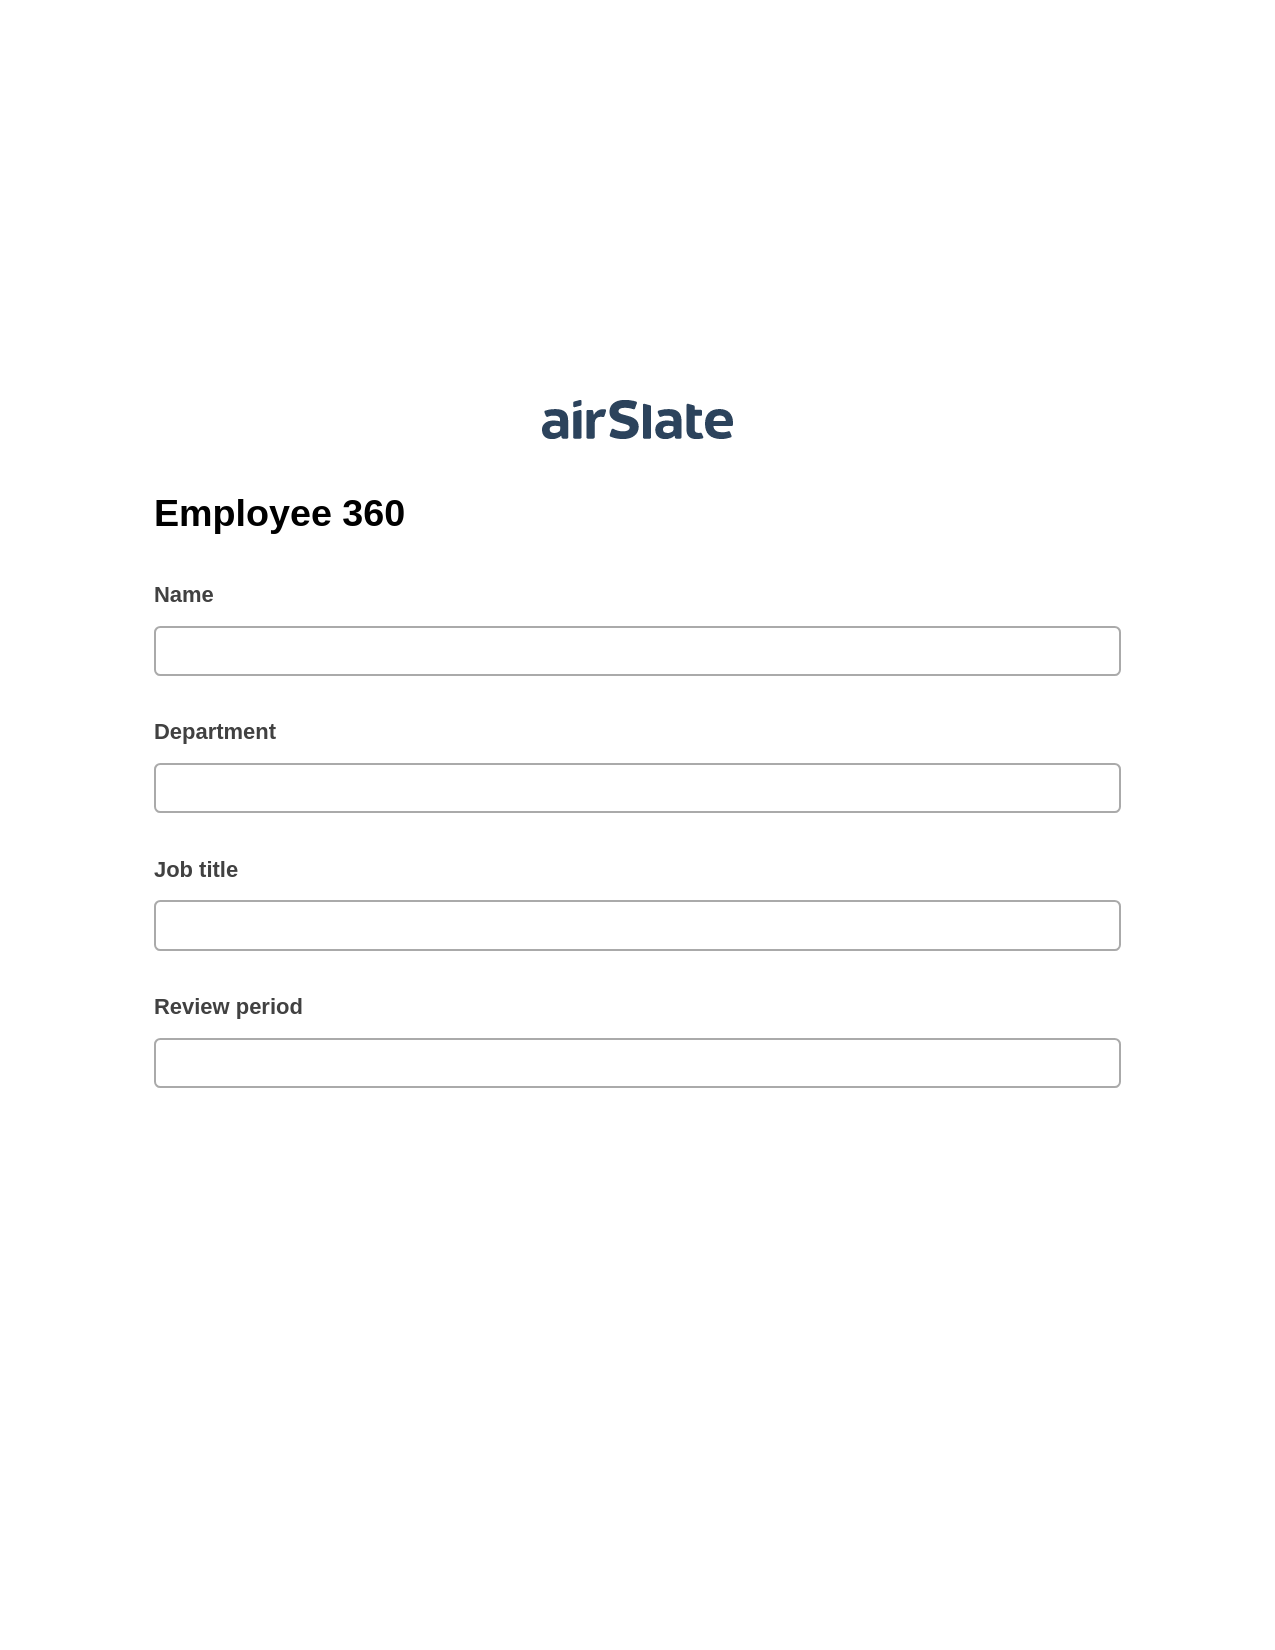 Multirole Employee 360 Pre-fill from Excel Spreadsheet Bot, Webhook Bot, Post-finish Document Bot